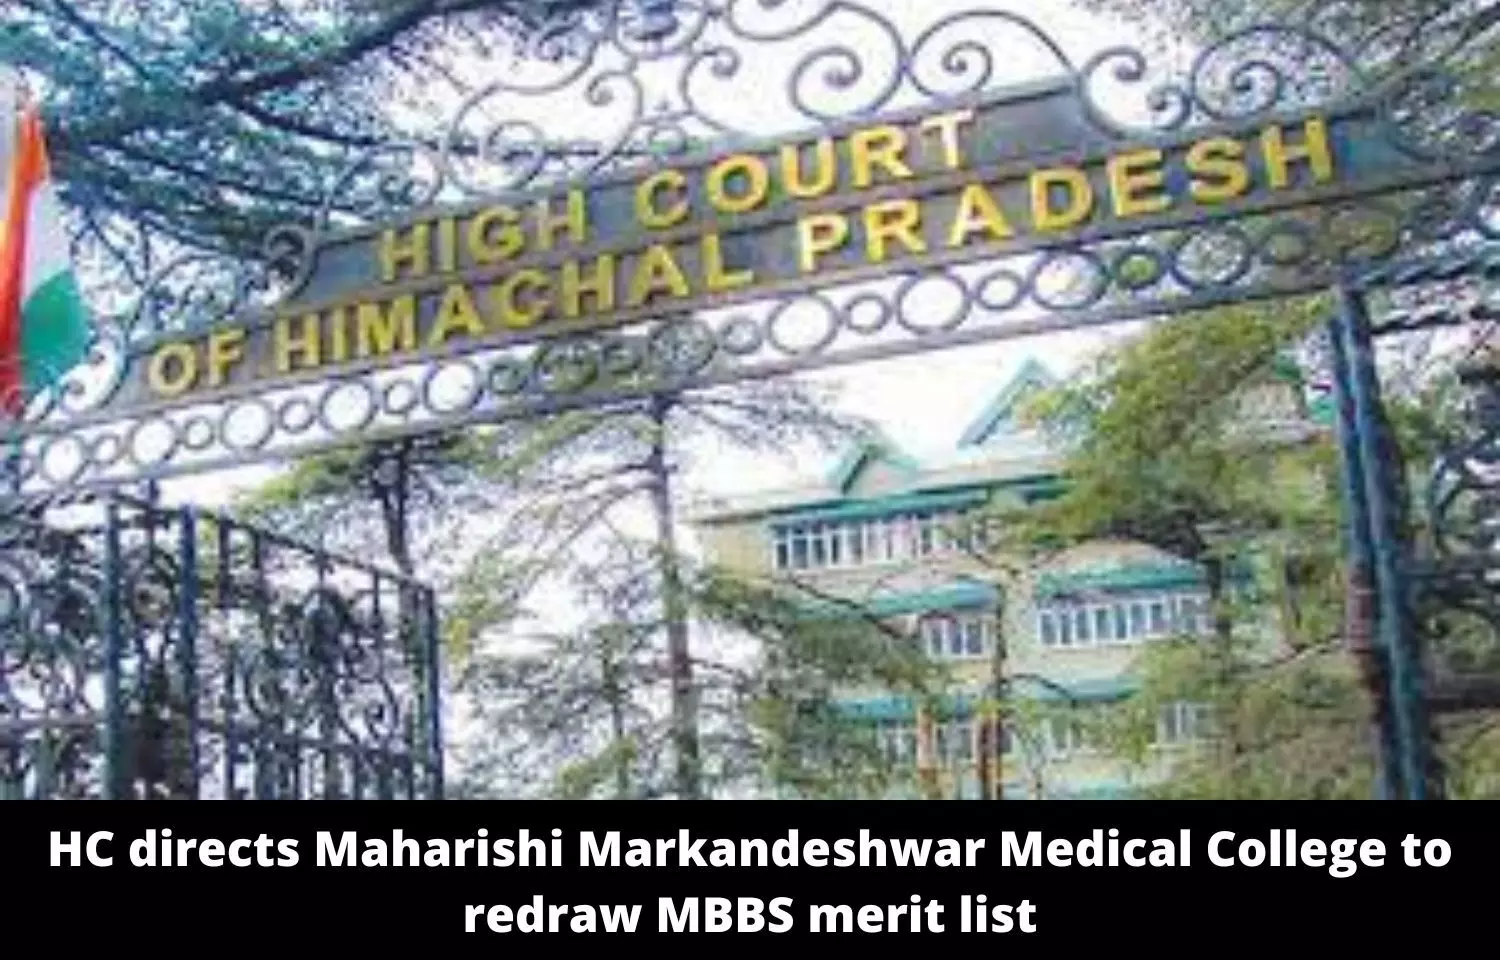 Himachal Pradesh HC directs Maharishi Markandeshwar Medical College to redraw MBBS merit list